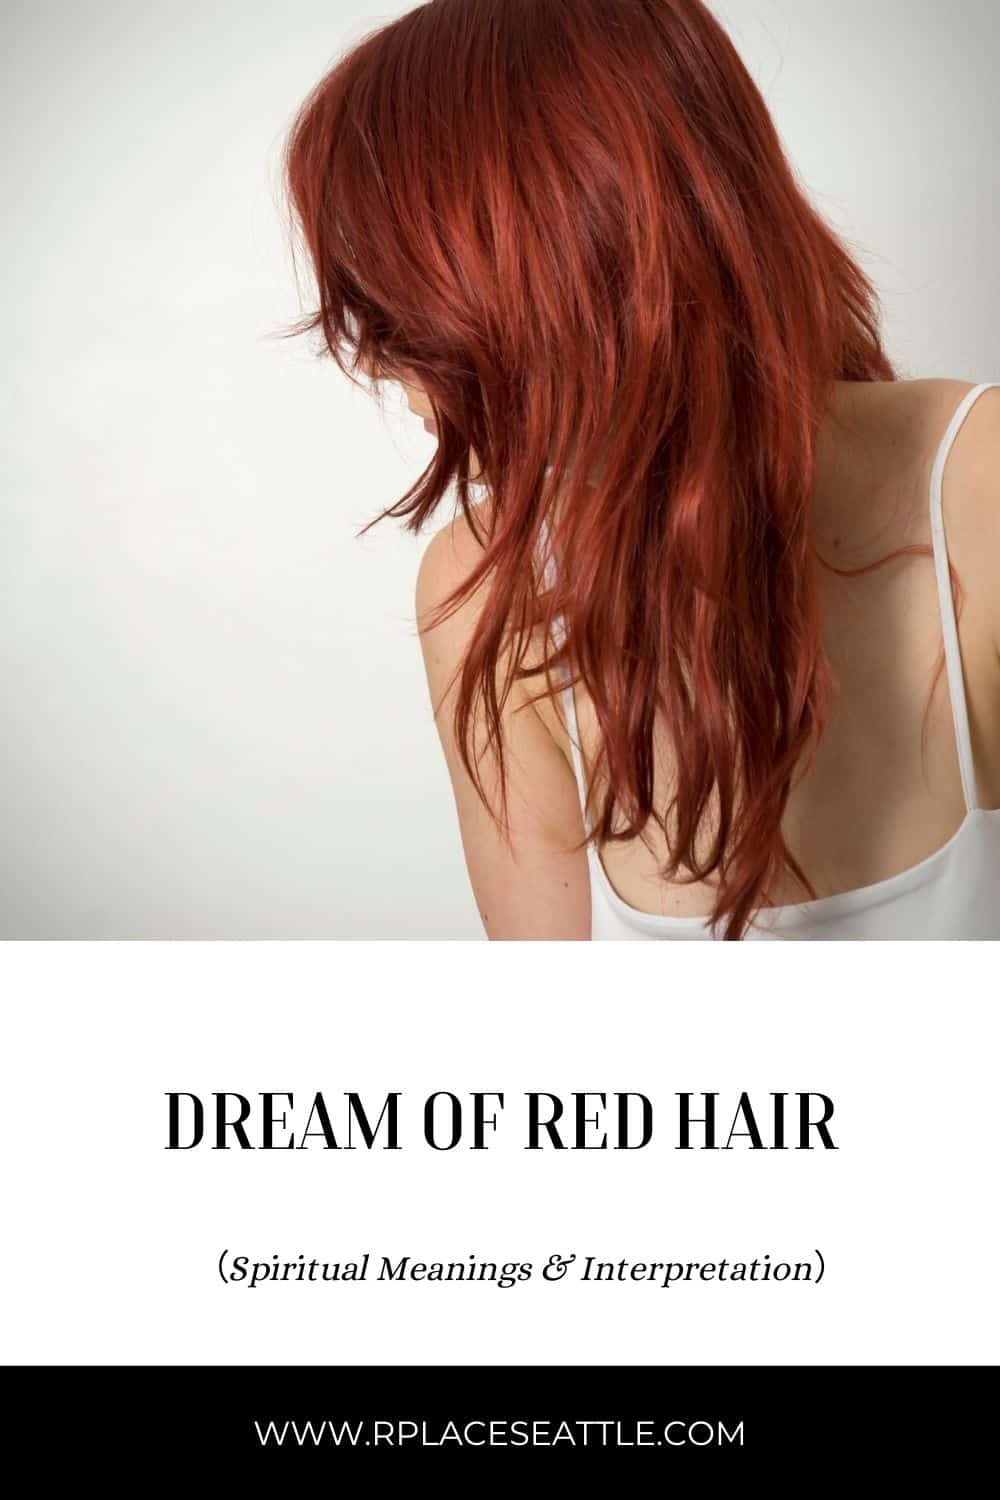 Drømmeleksikon om rødt hår: Fortolk nu!